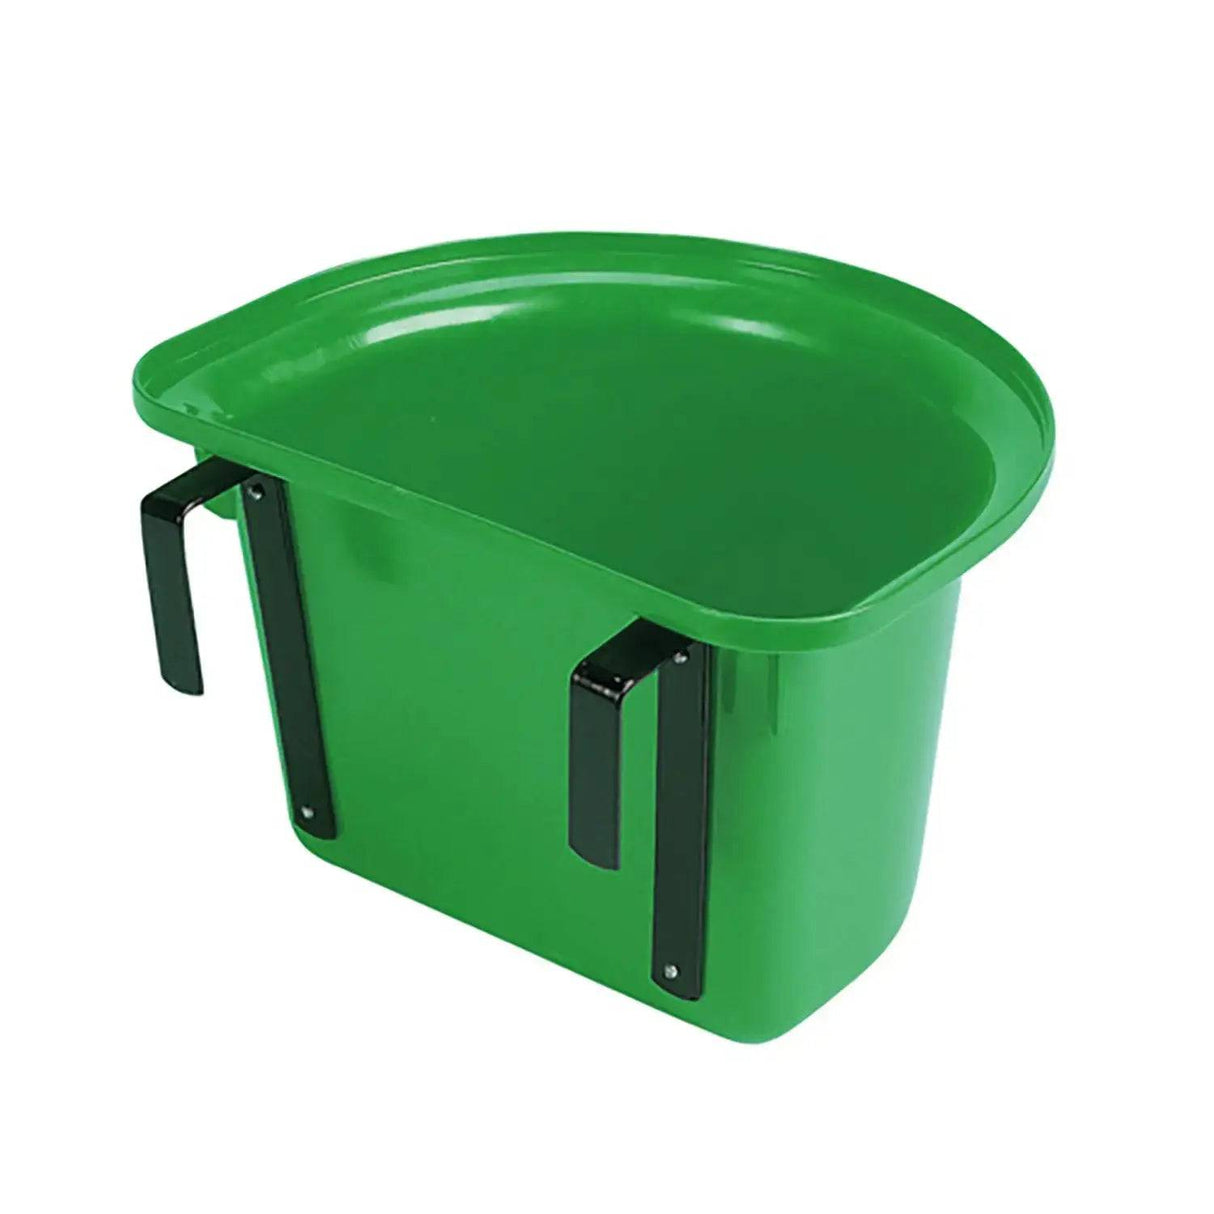 Stubbs Plastic Portable Manger Hanging Bucket Buckets & Bowls Green Barnstaple Equestrian Supplies